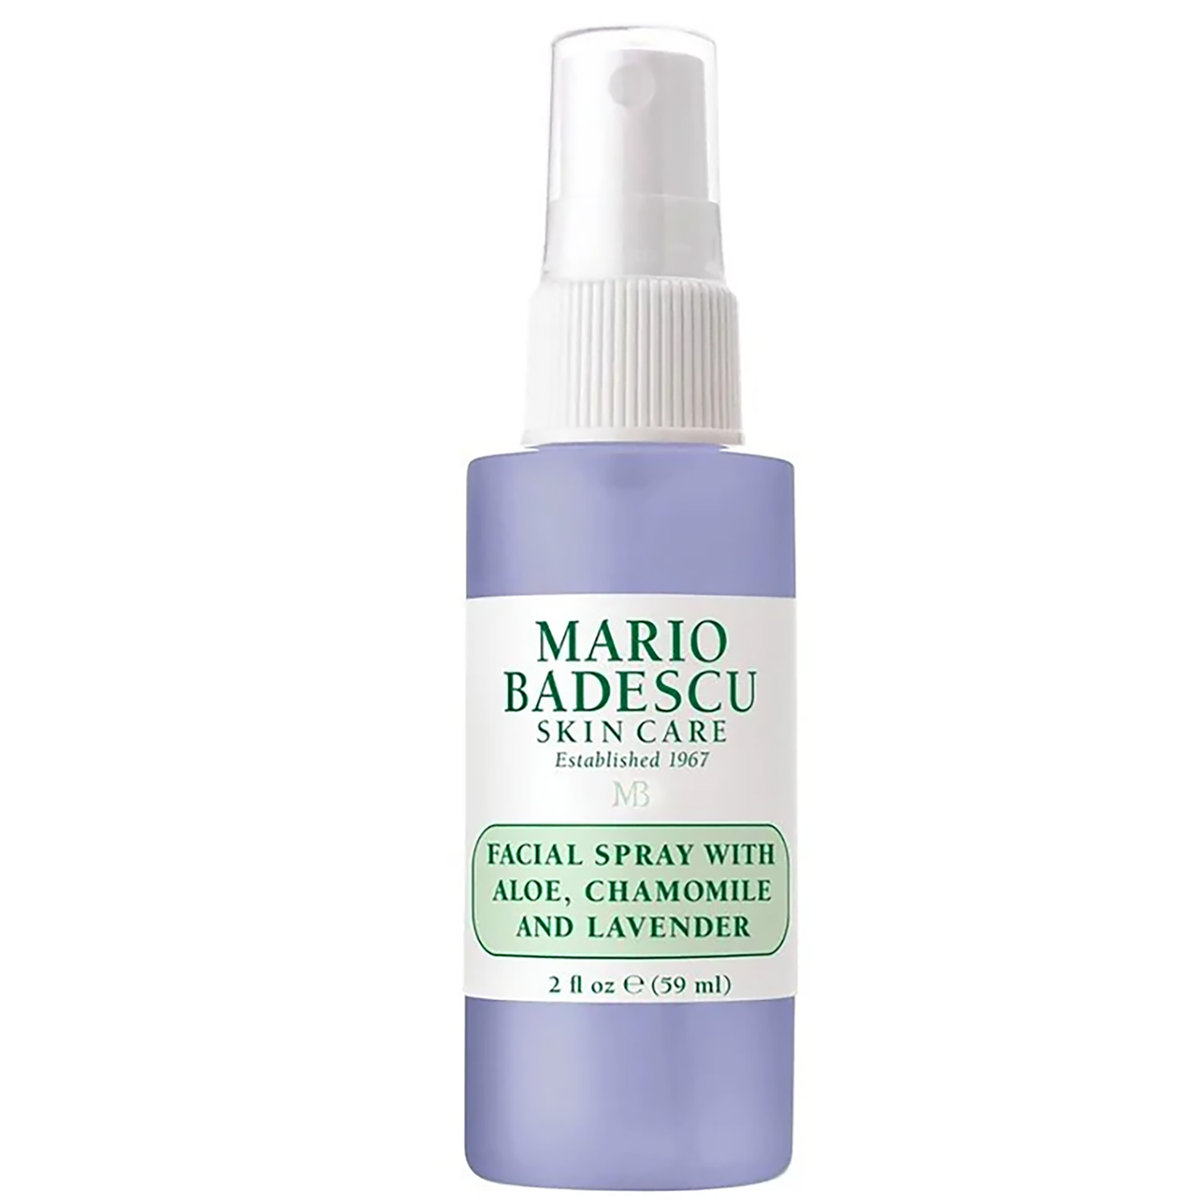 Mario Badescu Facial Spray W/ Aloe, Chamomile & Lavender (59ml)